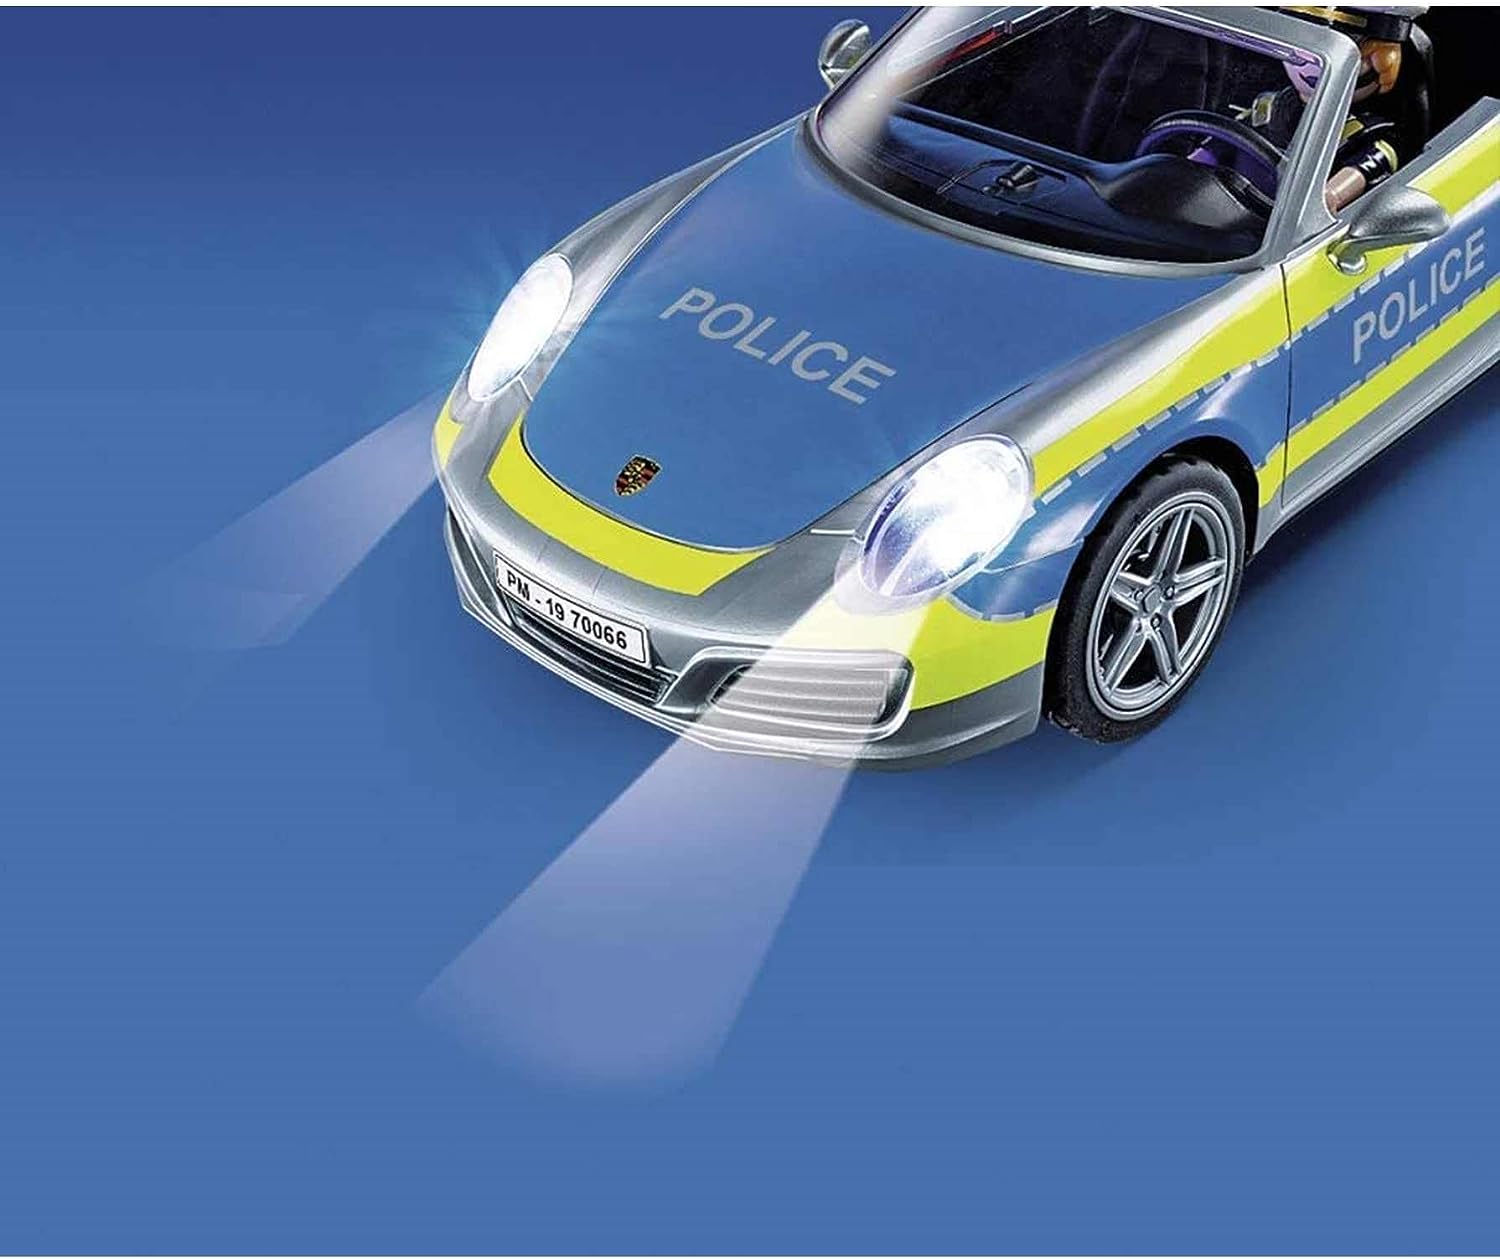 Playmobil Porsche 911 Carrera 4S Police Toy